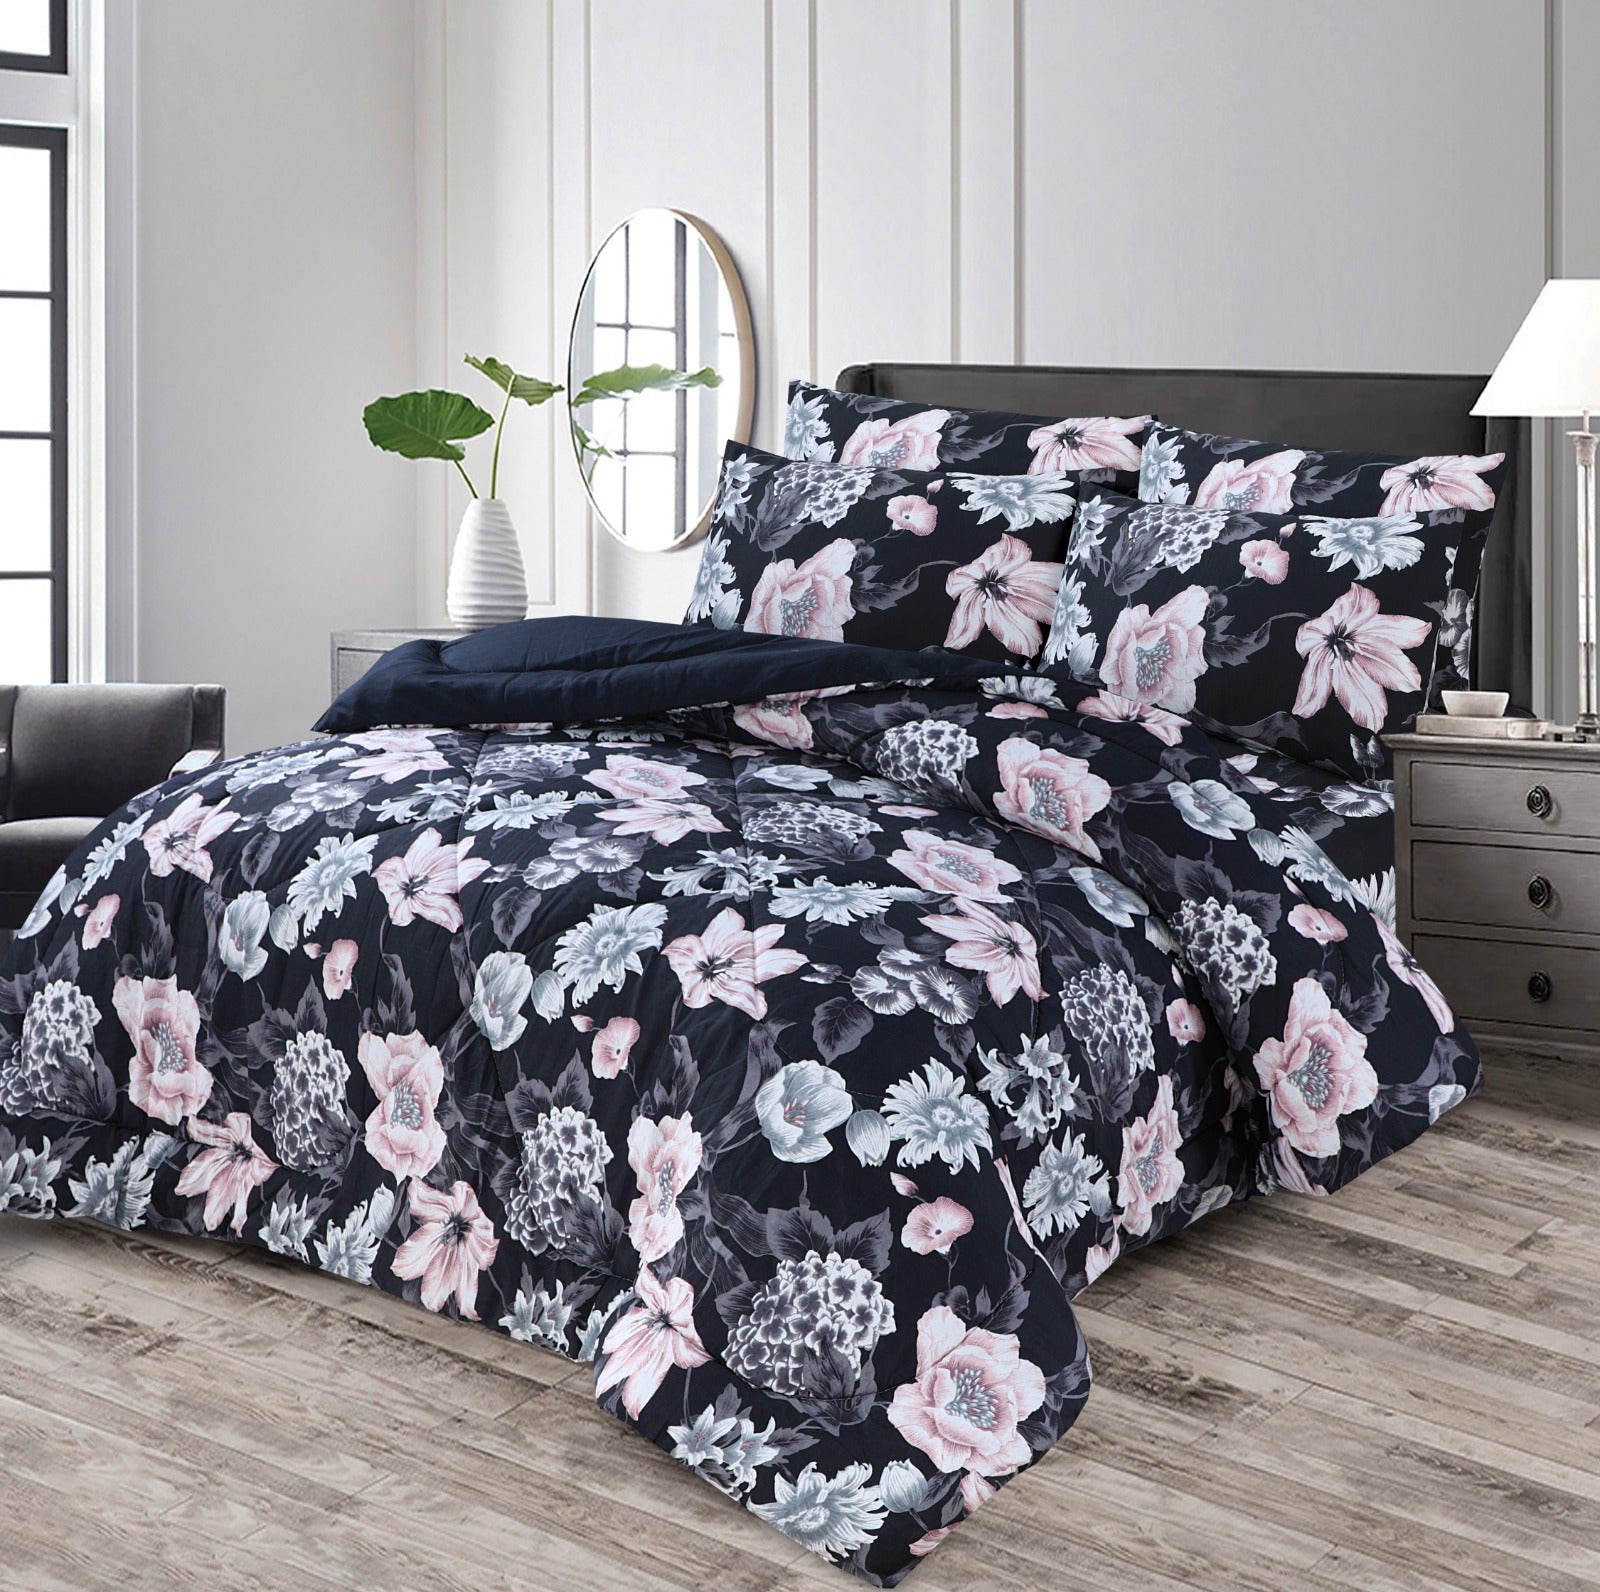 Blossoms - 6 pc Winter Cotton Comforter Set (Heavy Filling).